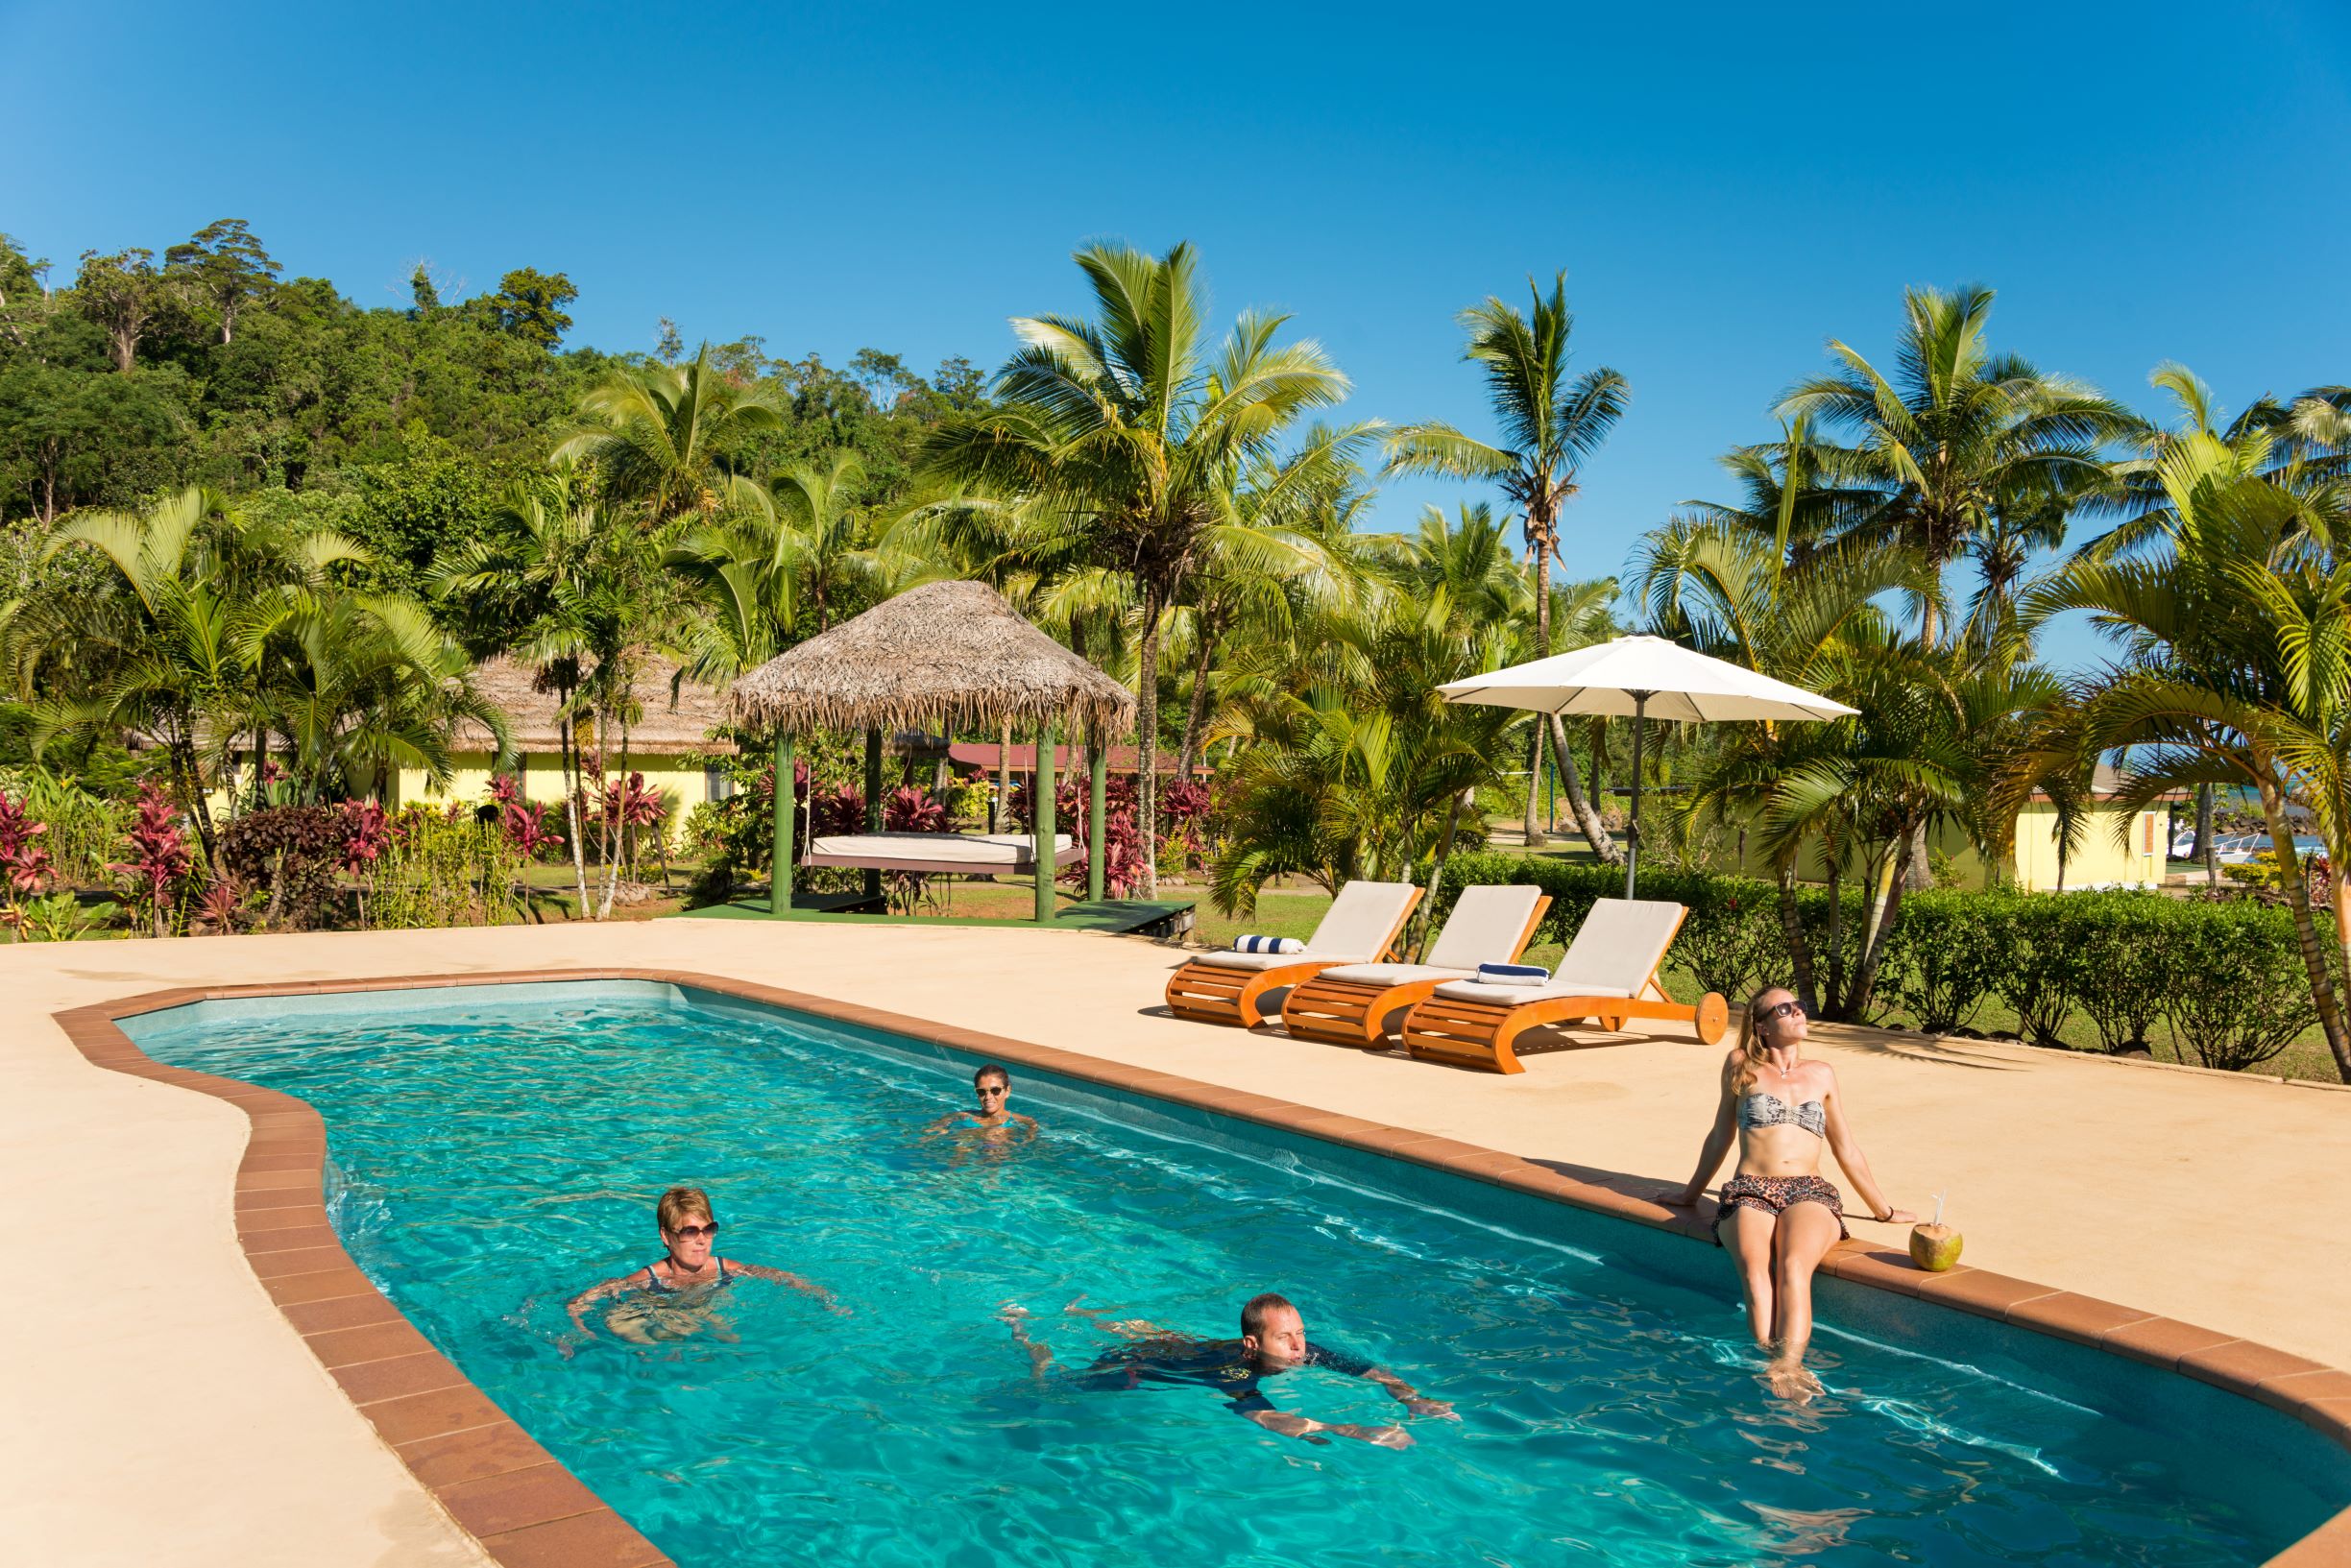 Waidroka Bay Resort - Fiji pool